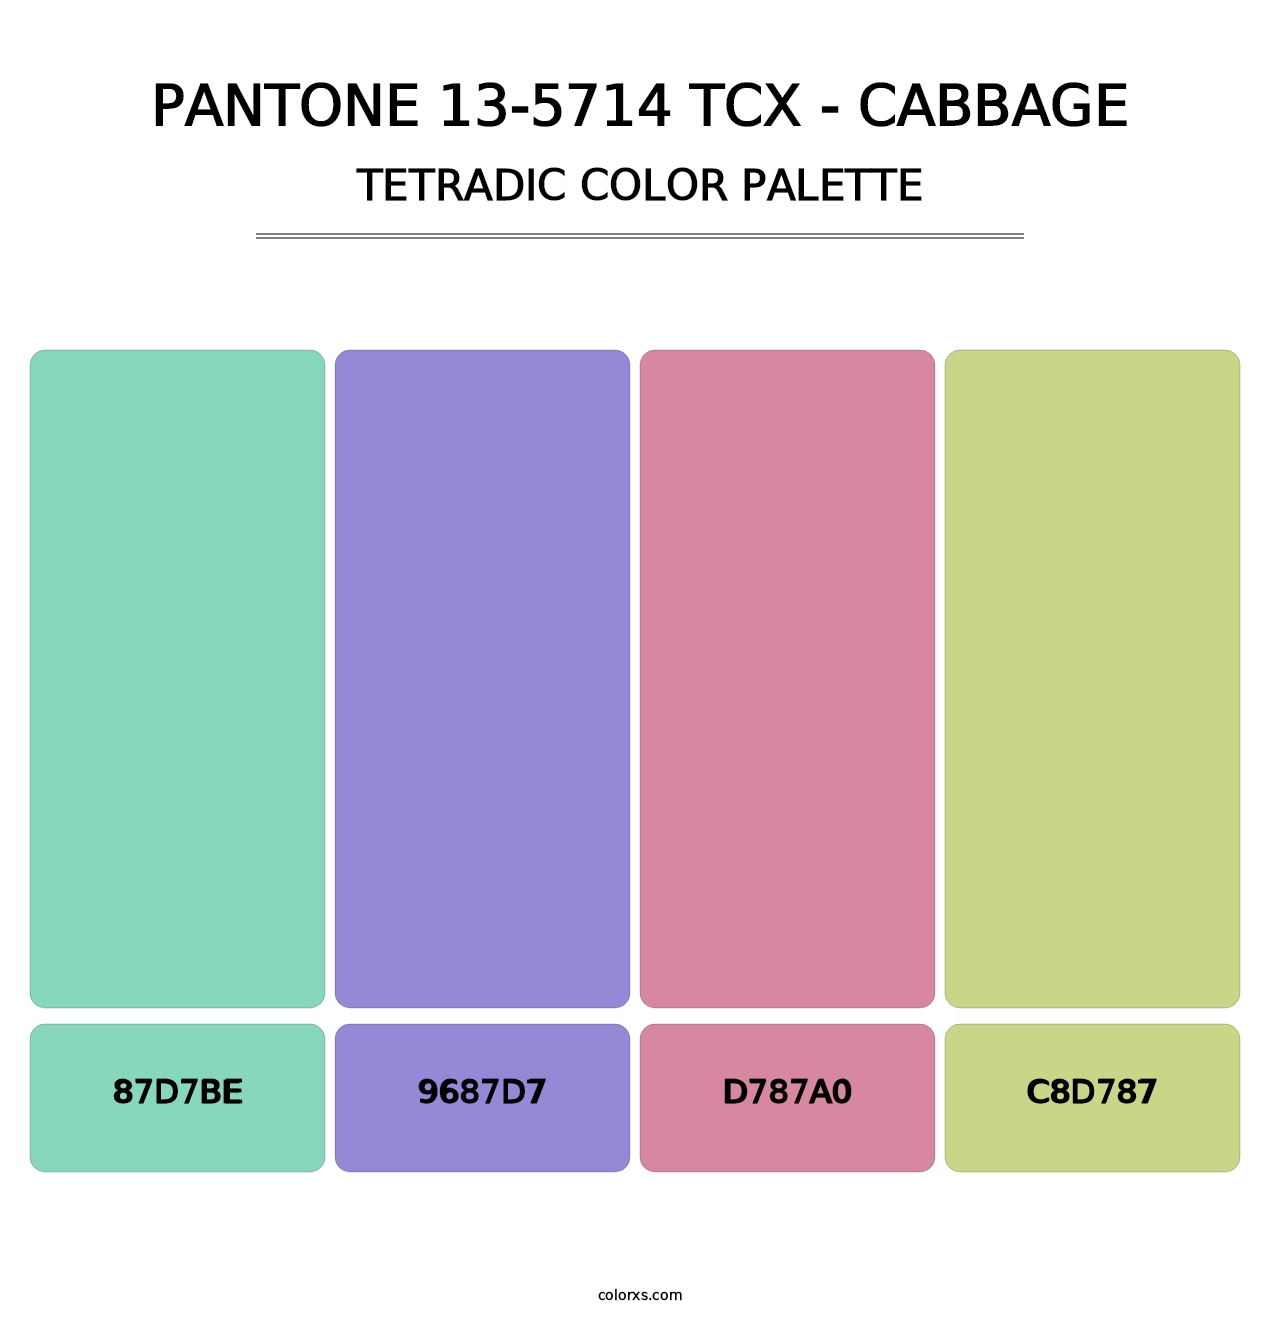 PANTONE 13-5714 TCX - Cabbage - Tetradic Color Palette